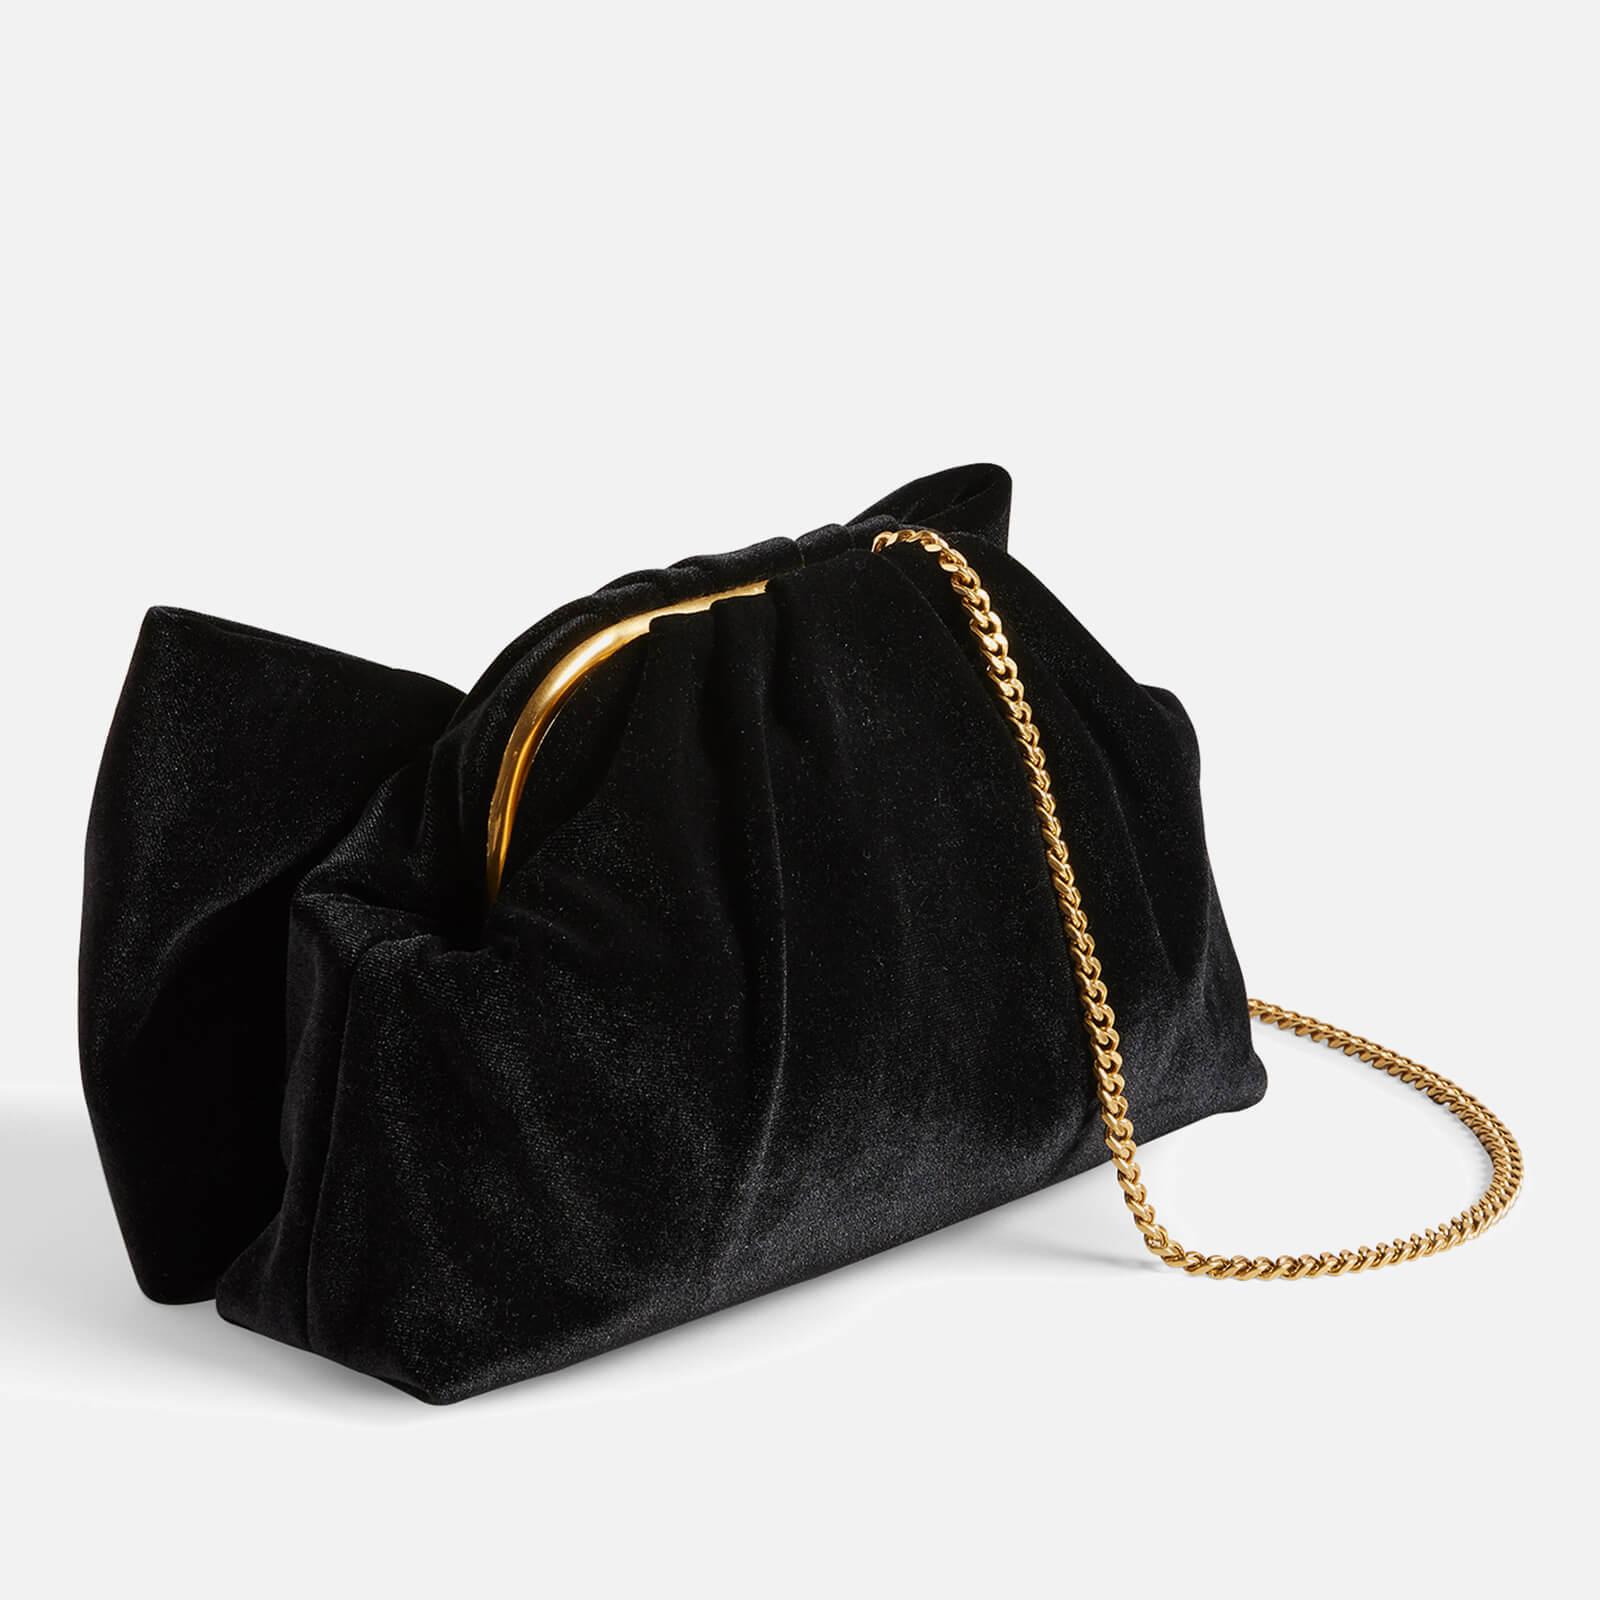 Ted Baker London Kylar-Crystal Clutch Bag, Black: Handbags: Amazon.com